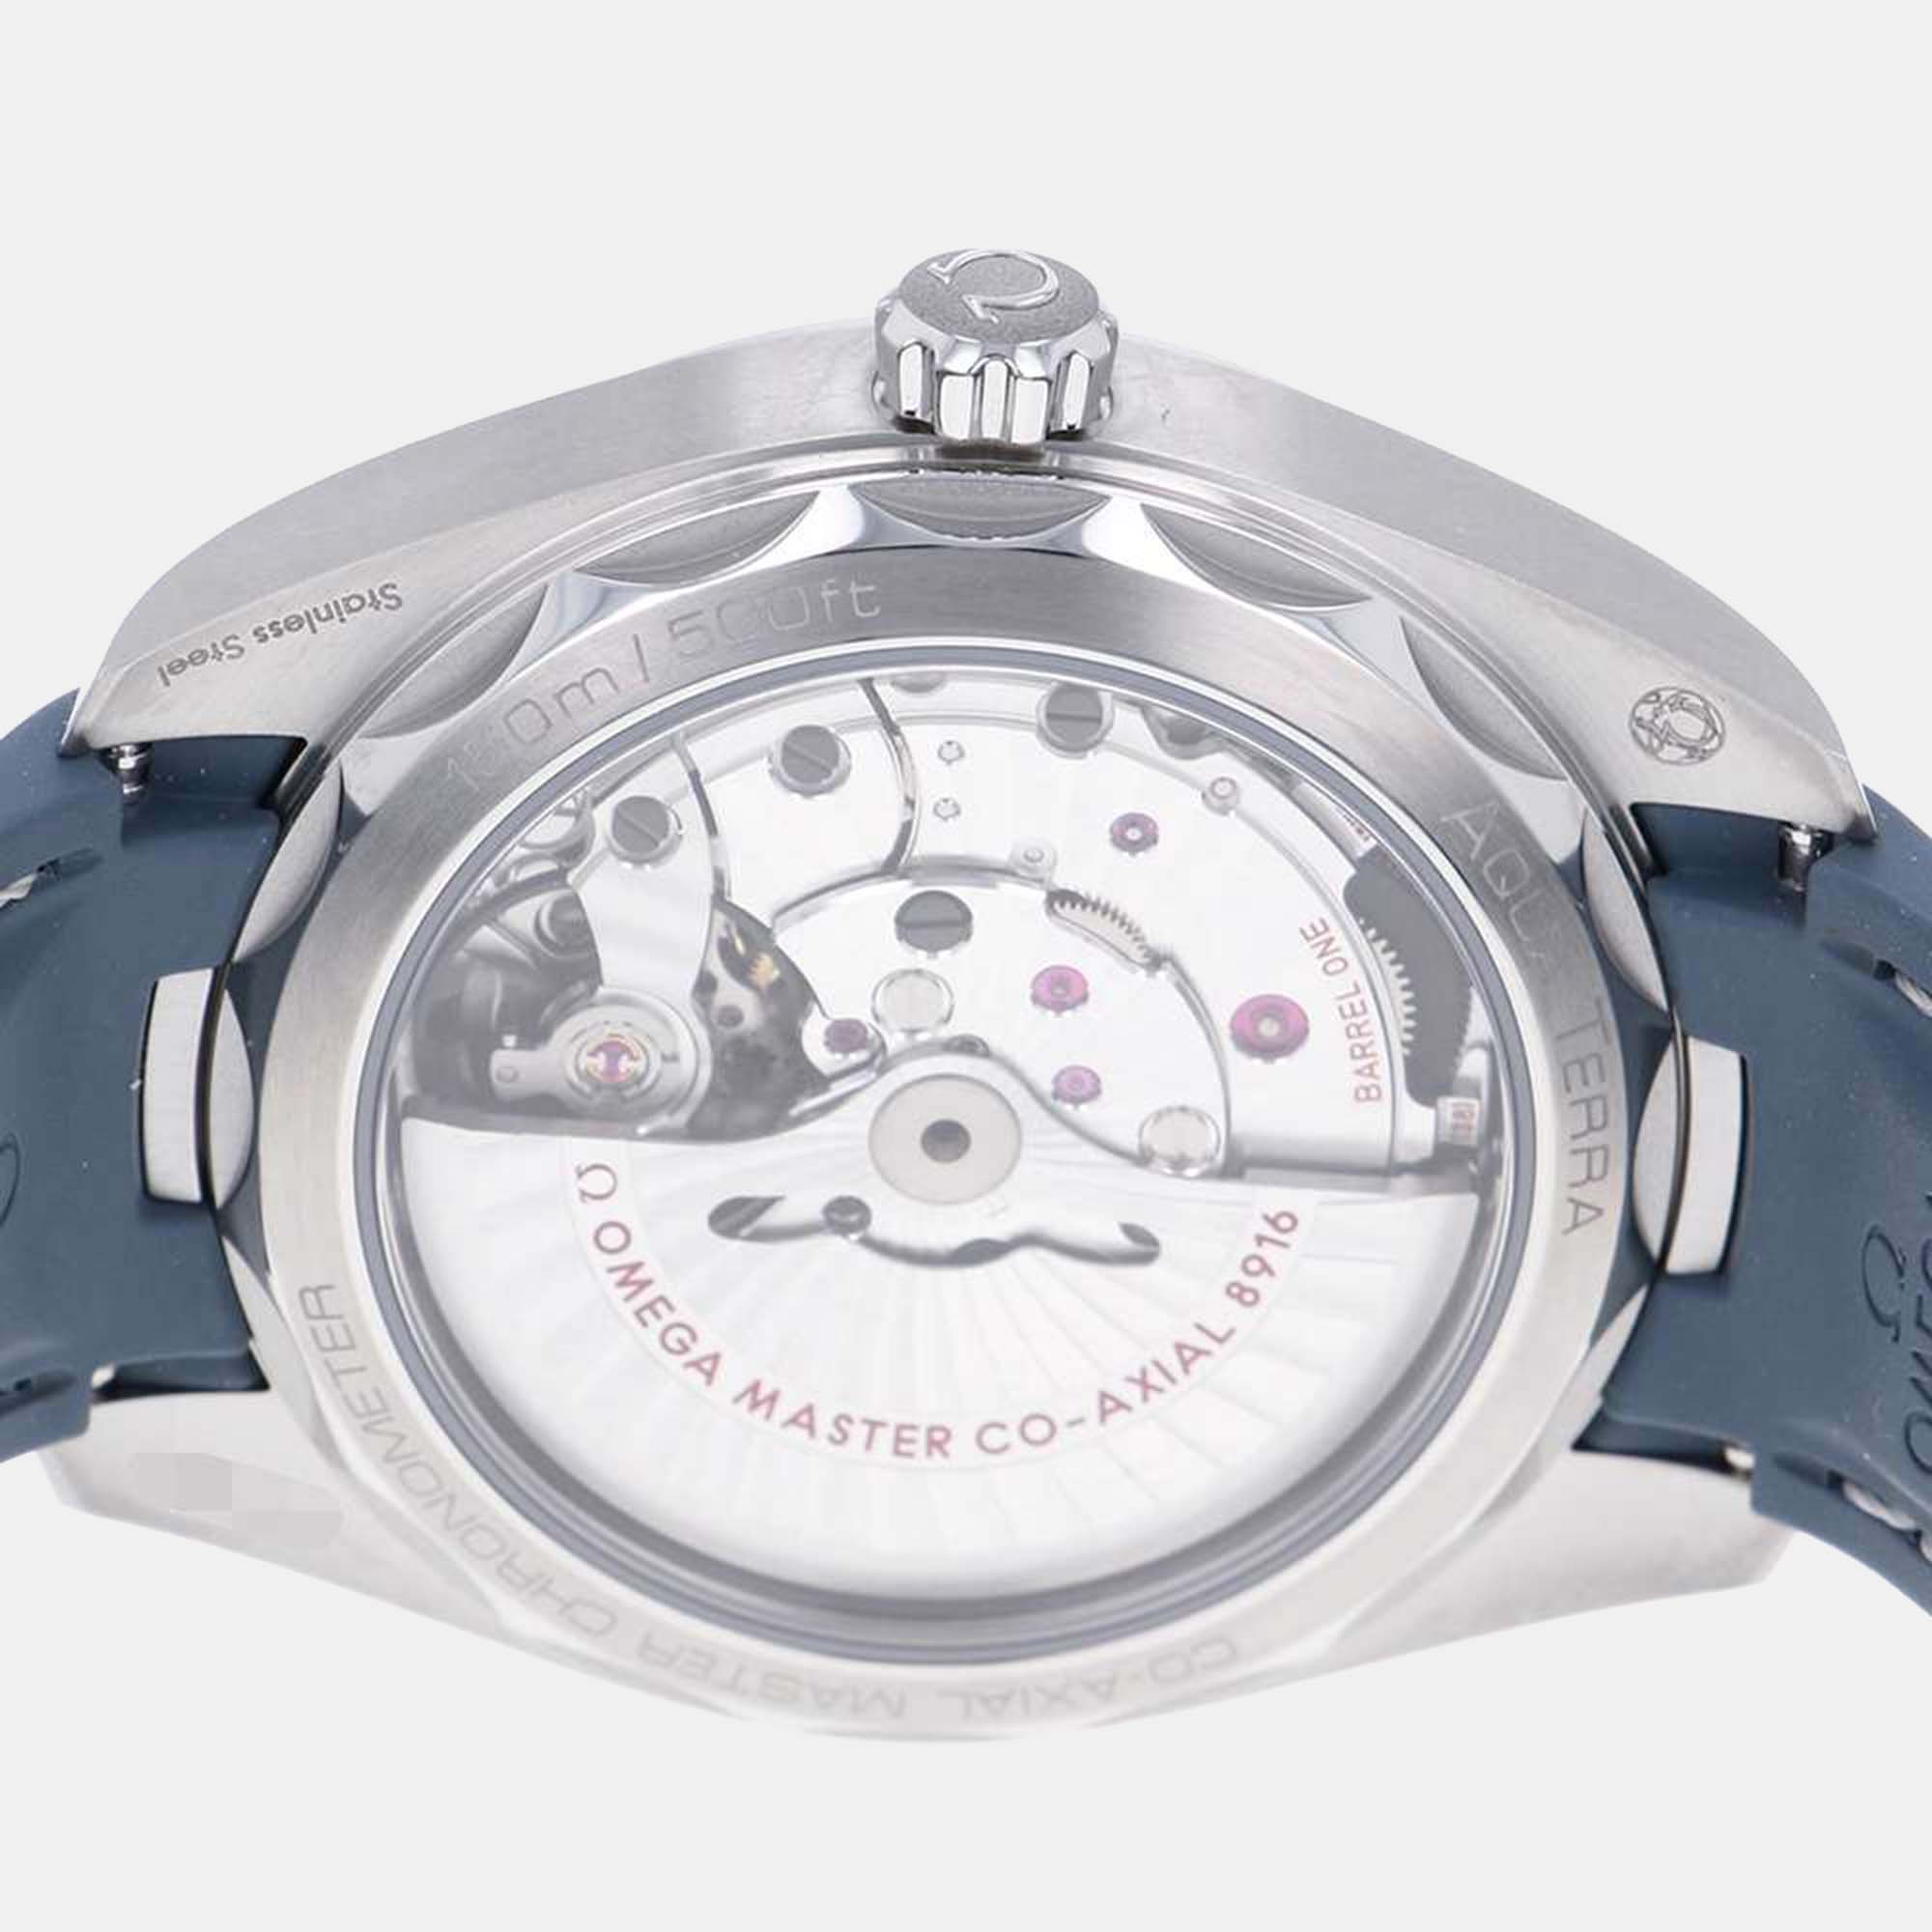 Omega Blue Stainless Steel Seamaster Aqua Terra 220.12.41.21.03.005 Automatic Men's Wristwatch 41 Mm